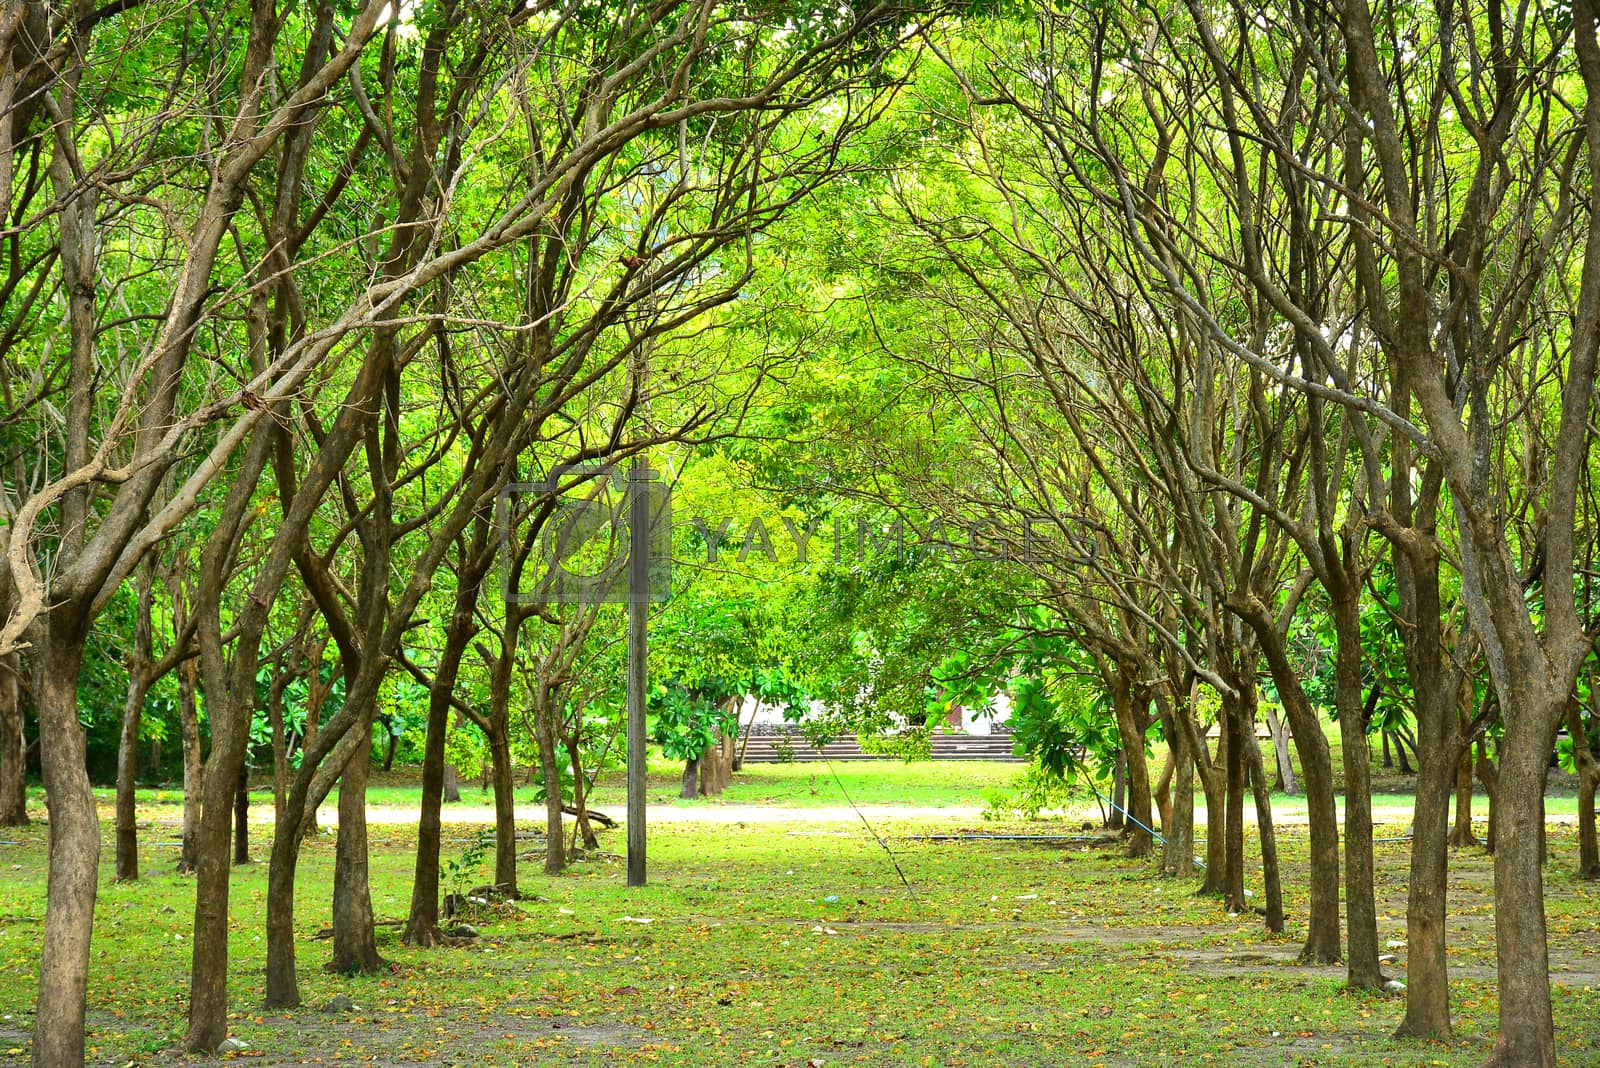 Royalty free image of Corregidor island surrounding trees in Cavite, Philippines by imwaltersy